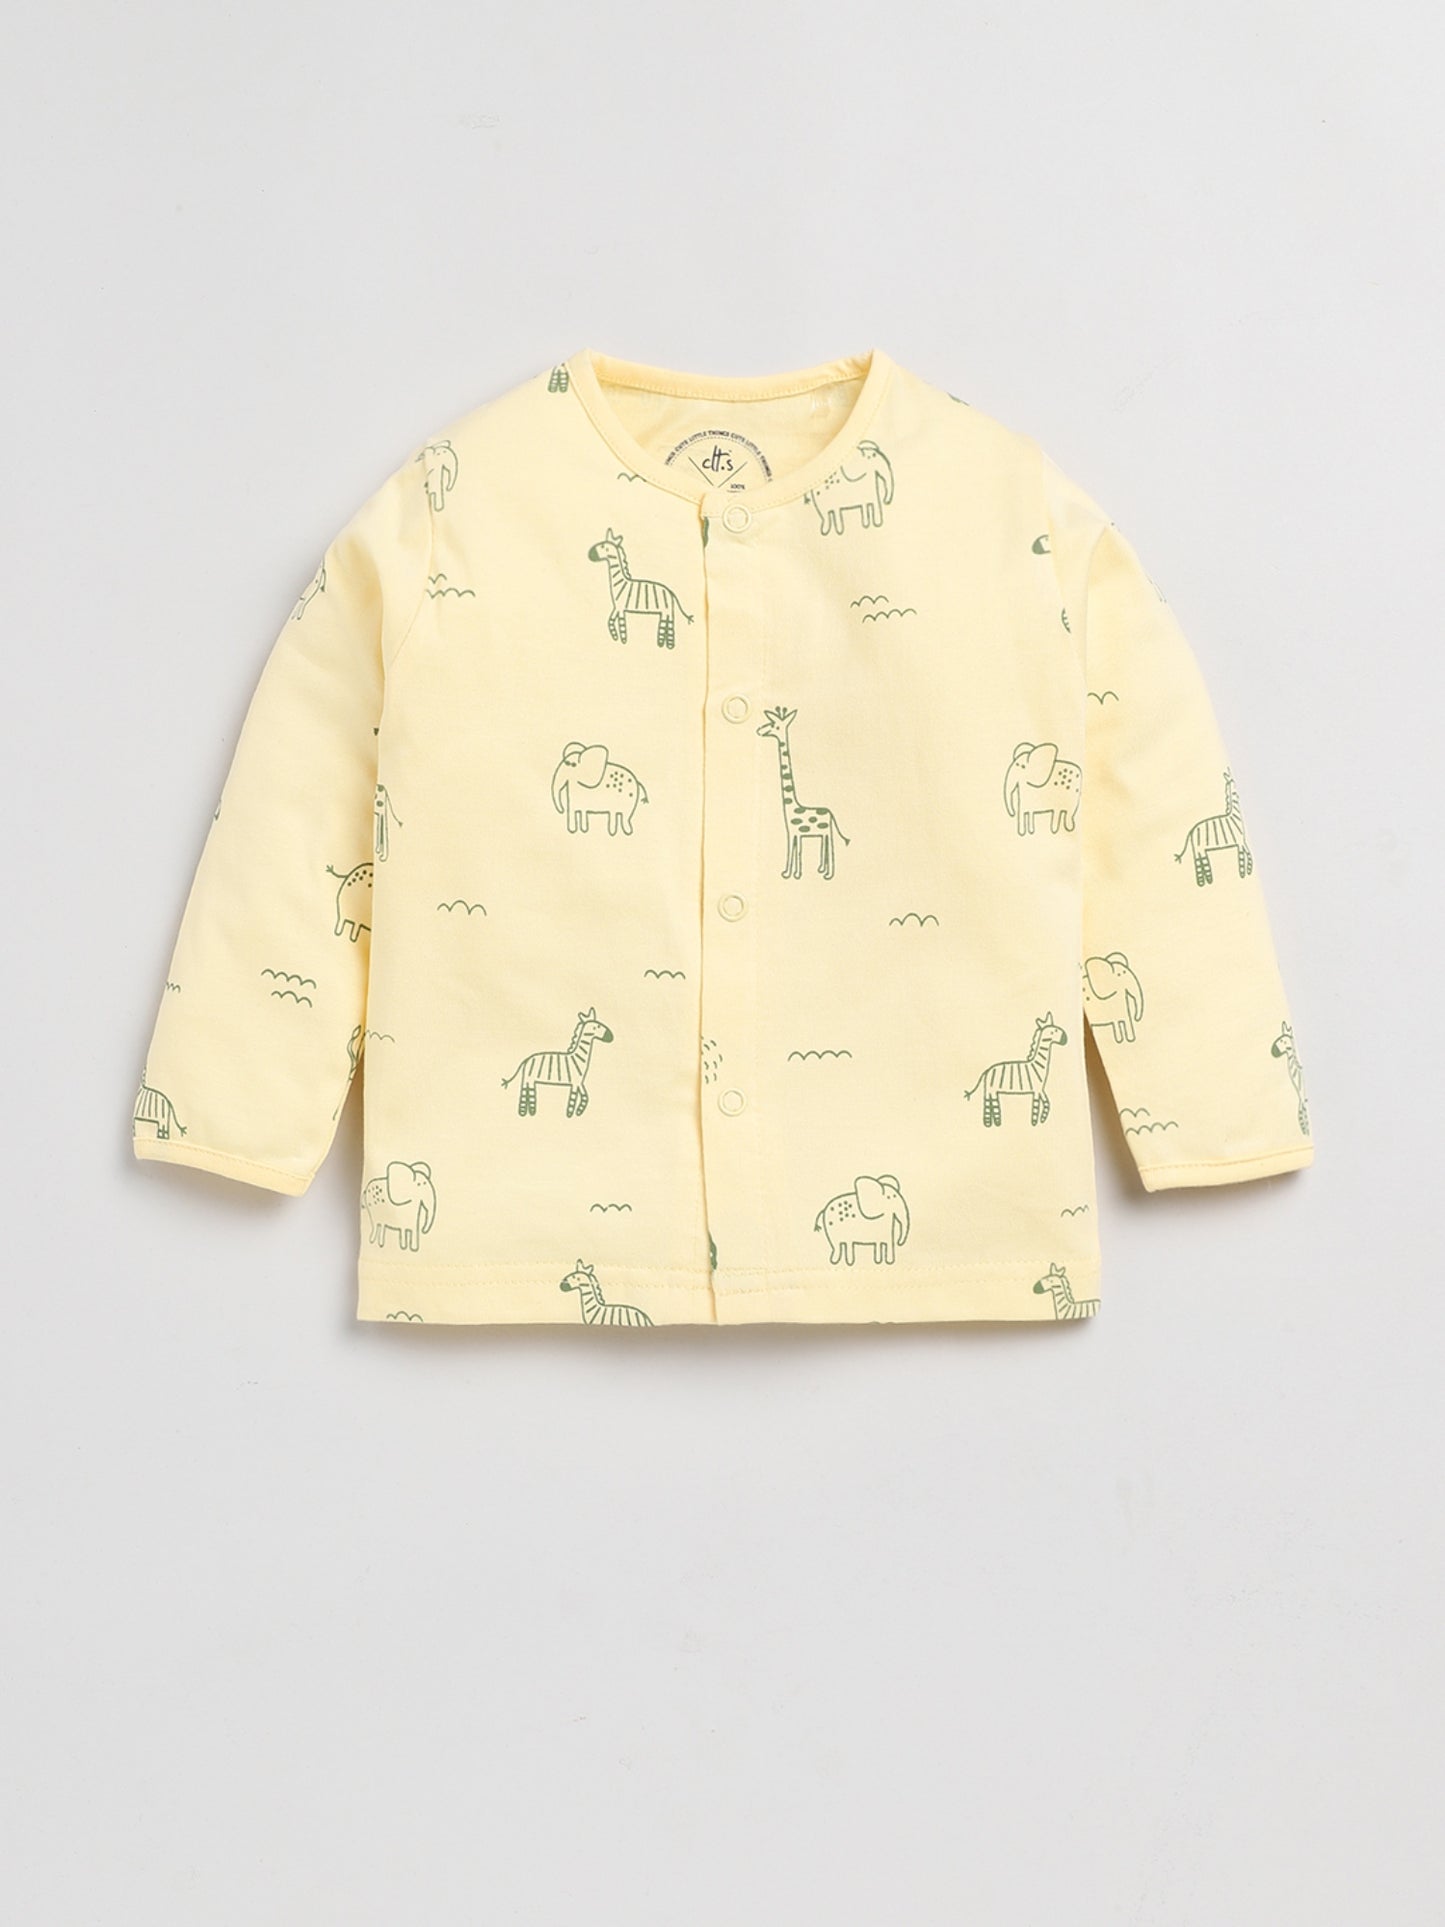 Cute Animal Print Yellow Full Sleeve Nightwear Set